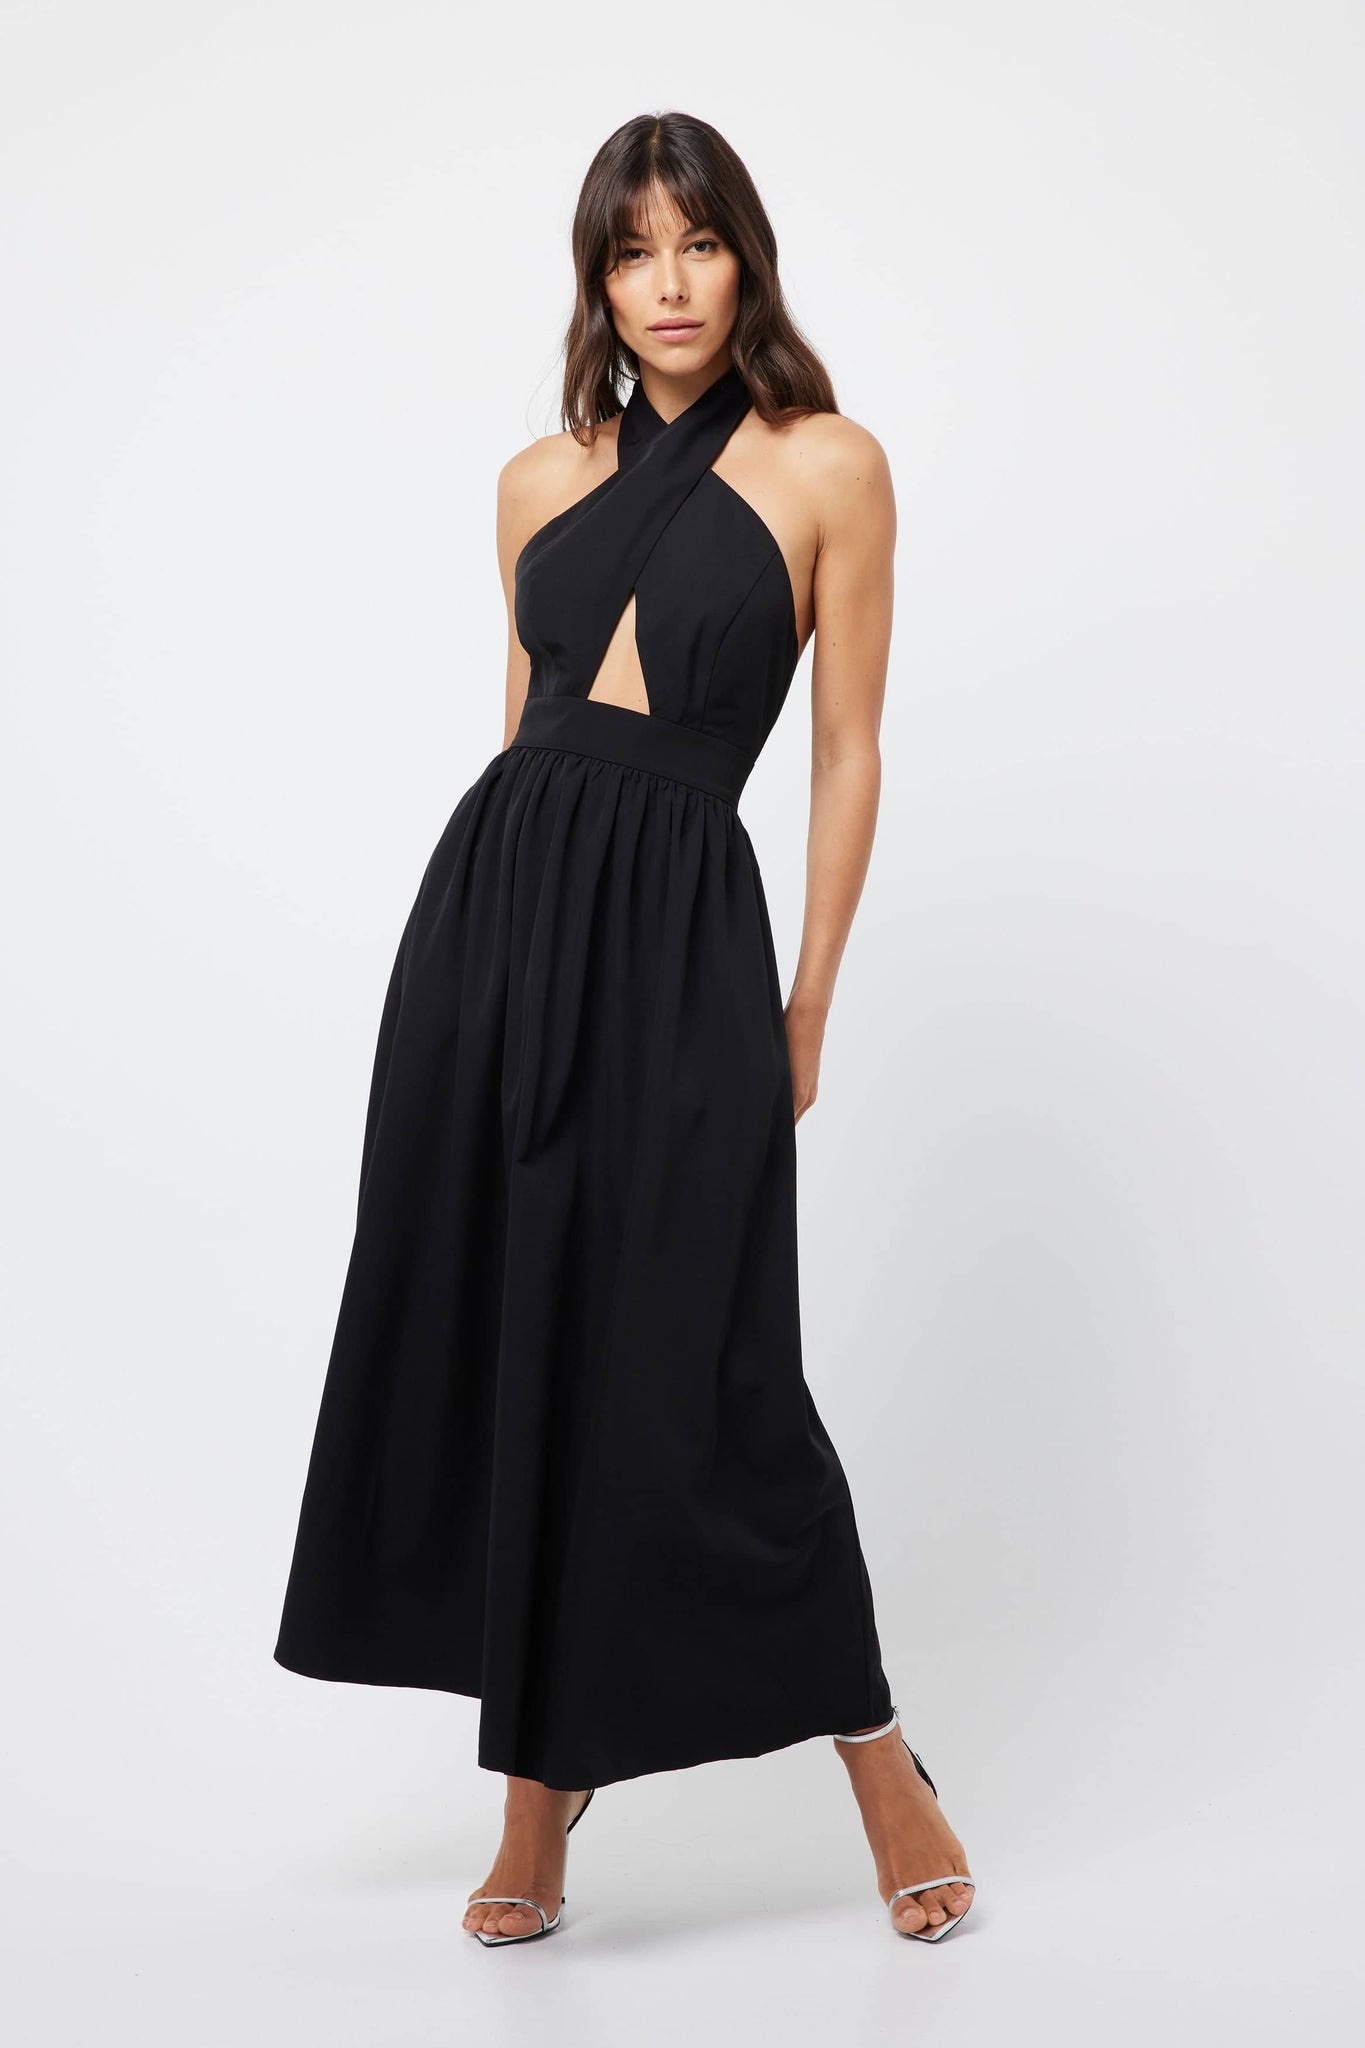 Mossman | Online Fashion, Dresses & Clothes Shopping.